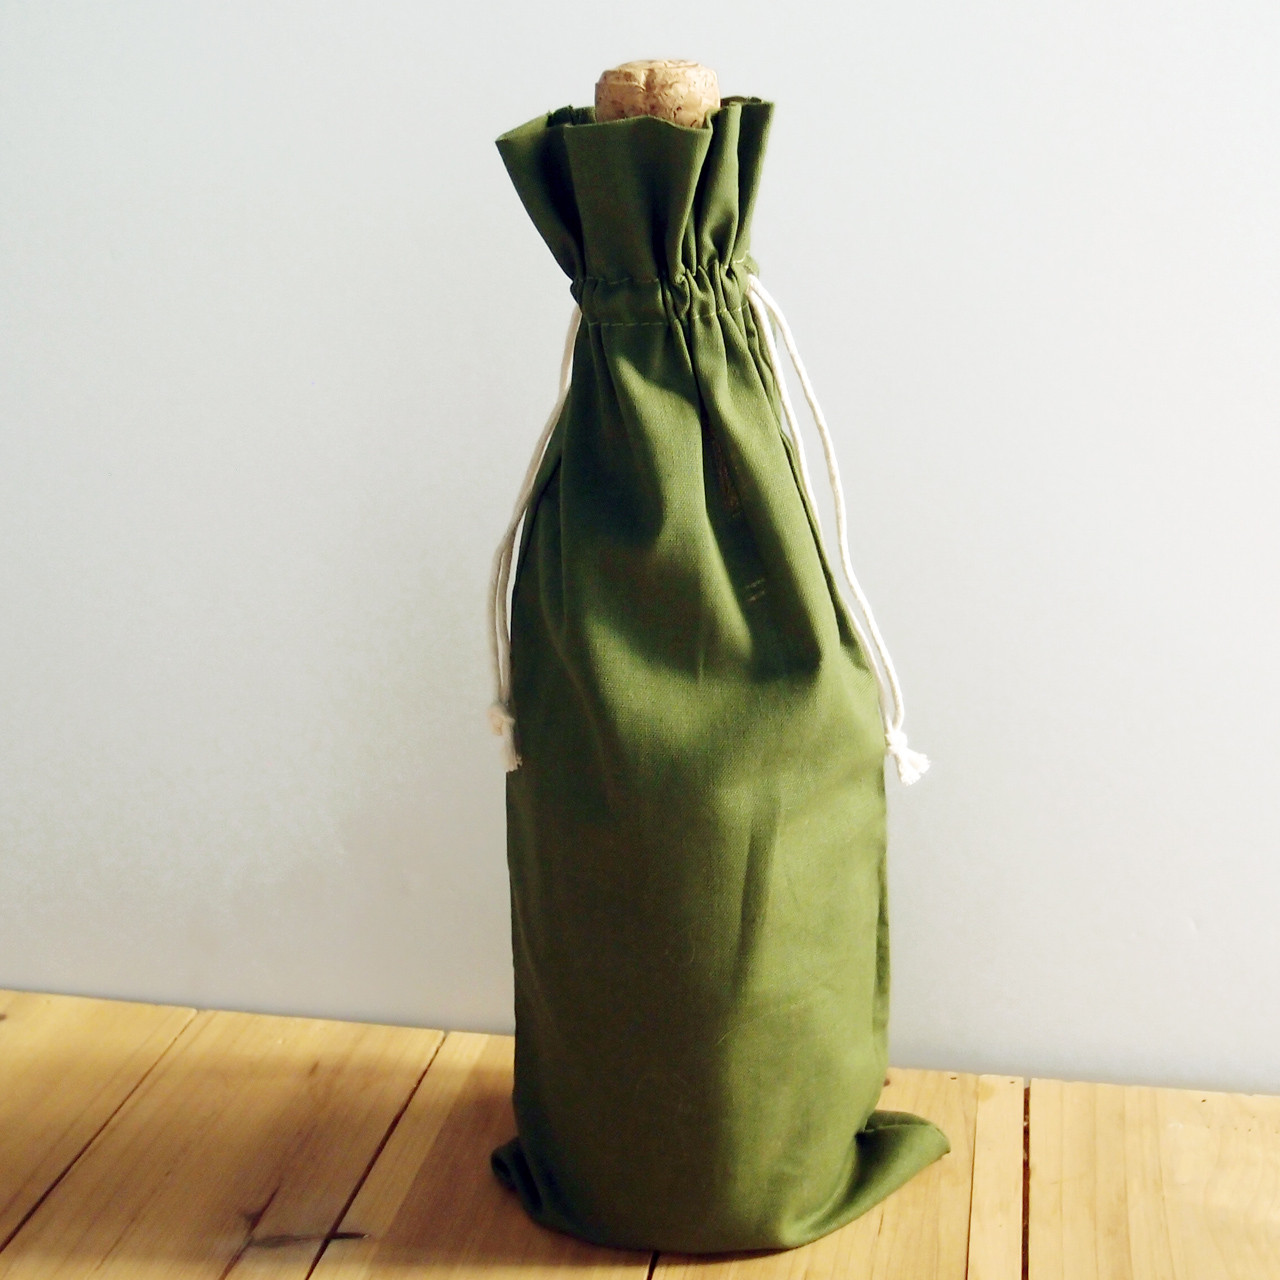 6 x 14 inches Olive Green Cotton Natural Drawstring Bag, Wholesale Cotton Drawstring Bags at Packaging Decor
B978-6-5